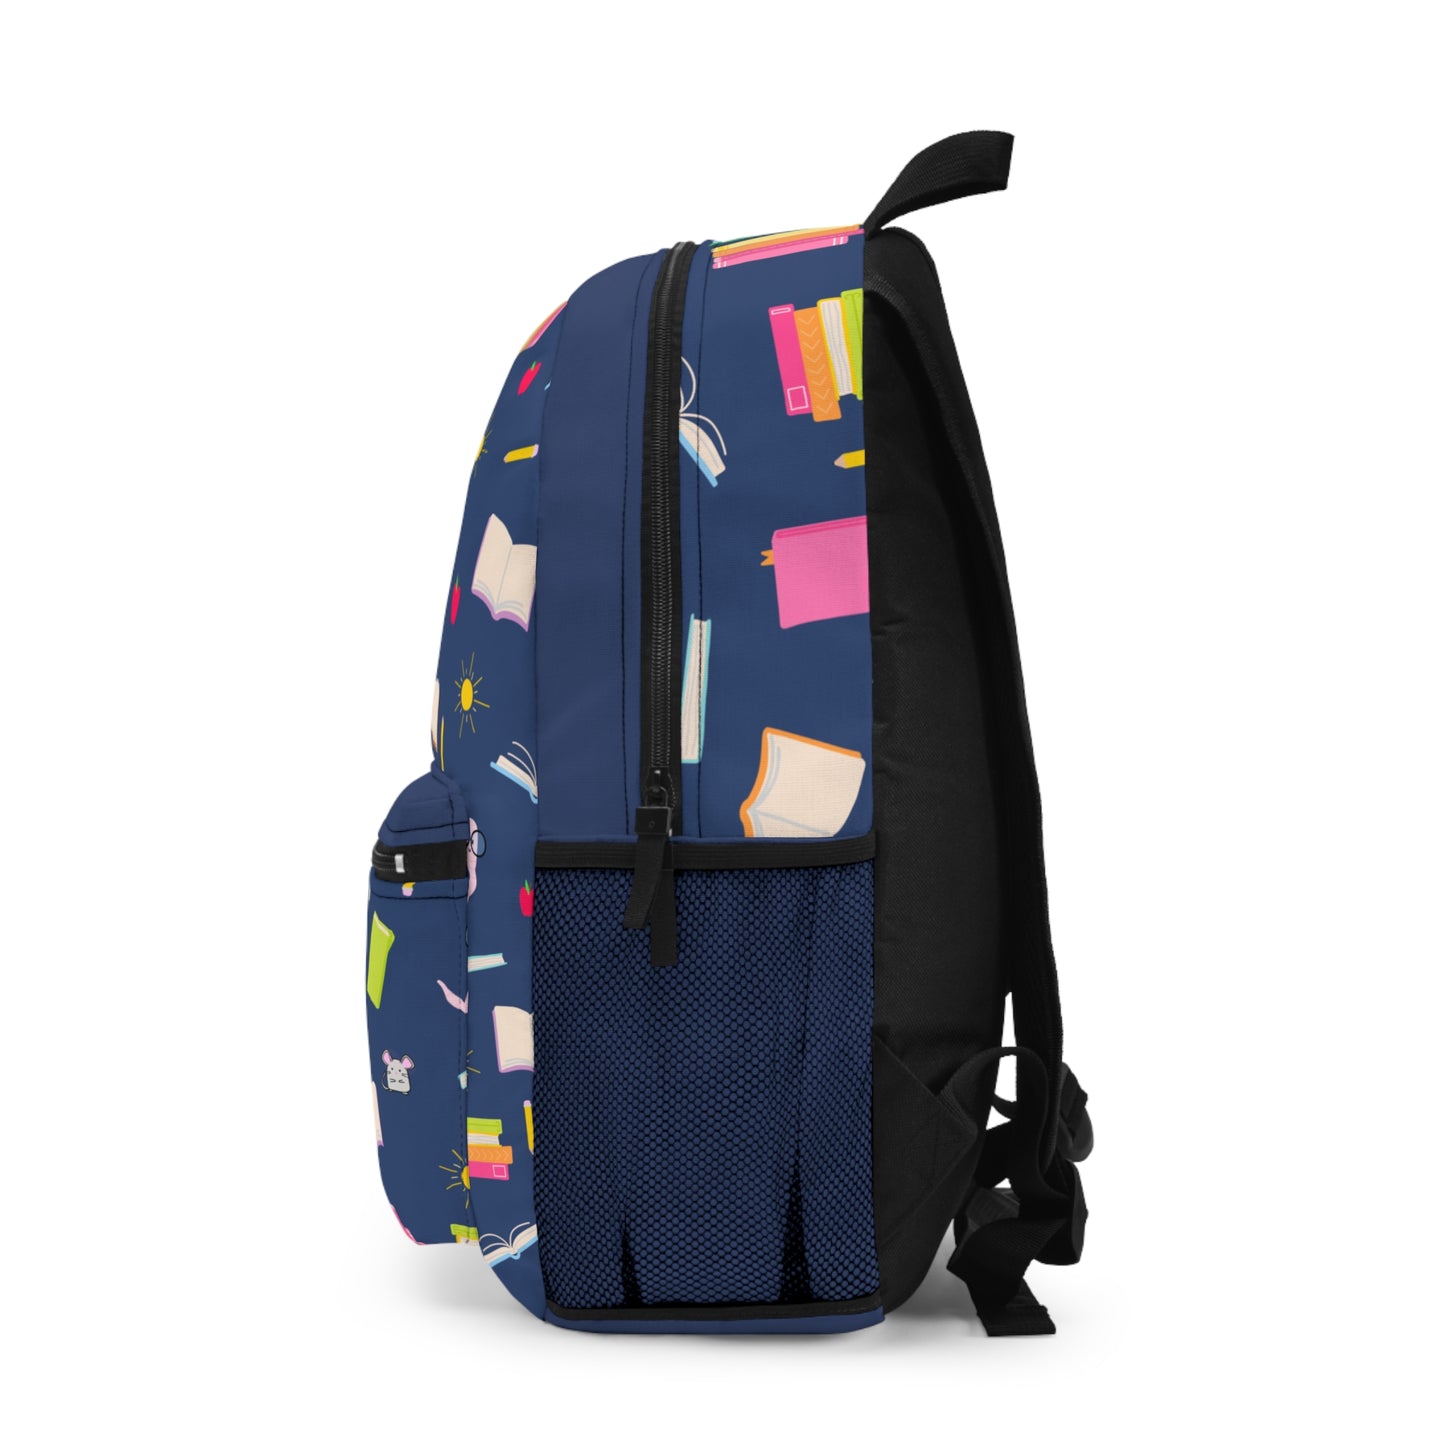 Book Lover Backpack